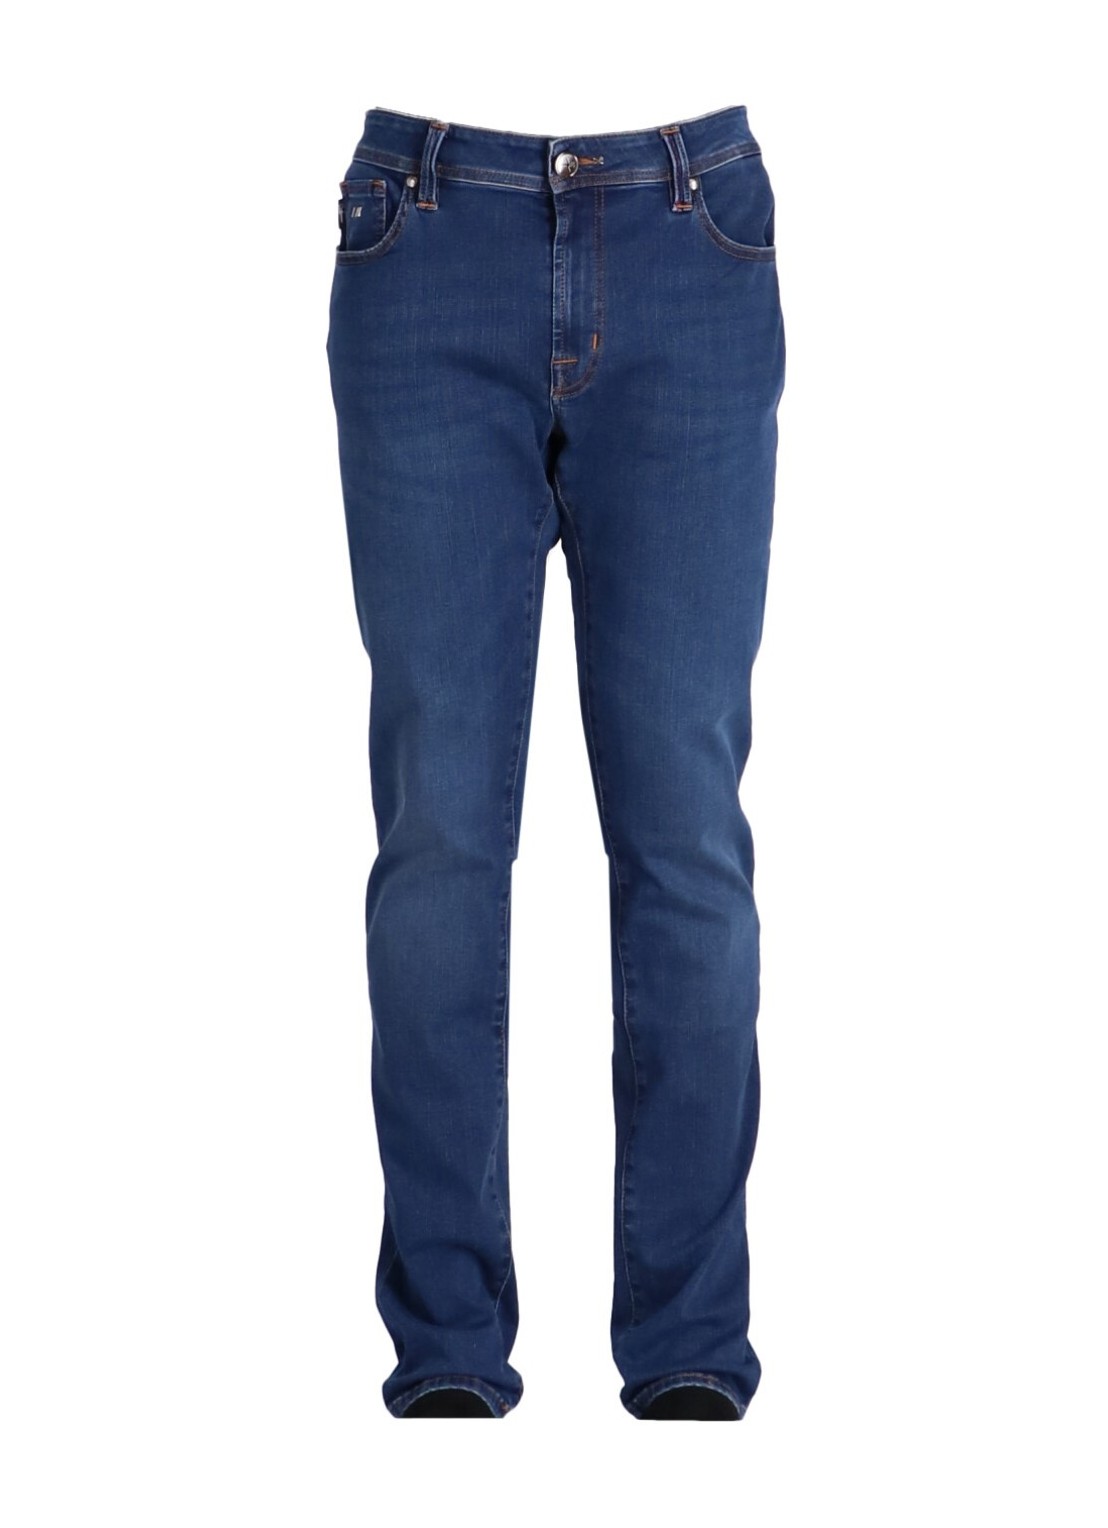 Pantalon jeans tramarossa denim man leonardo zip stre leonardo zip stre 6 months talla 33
 